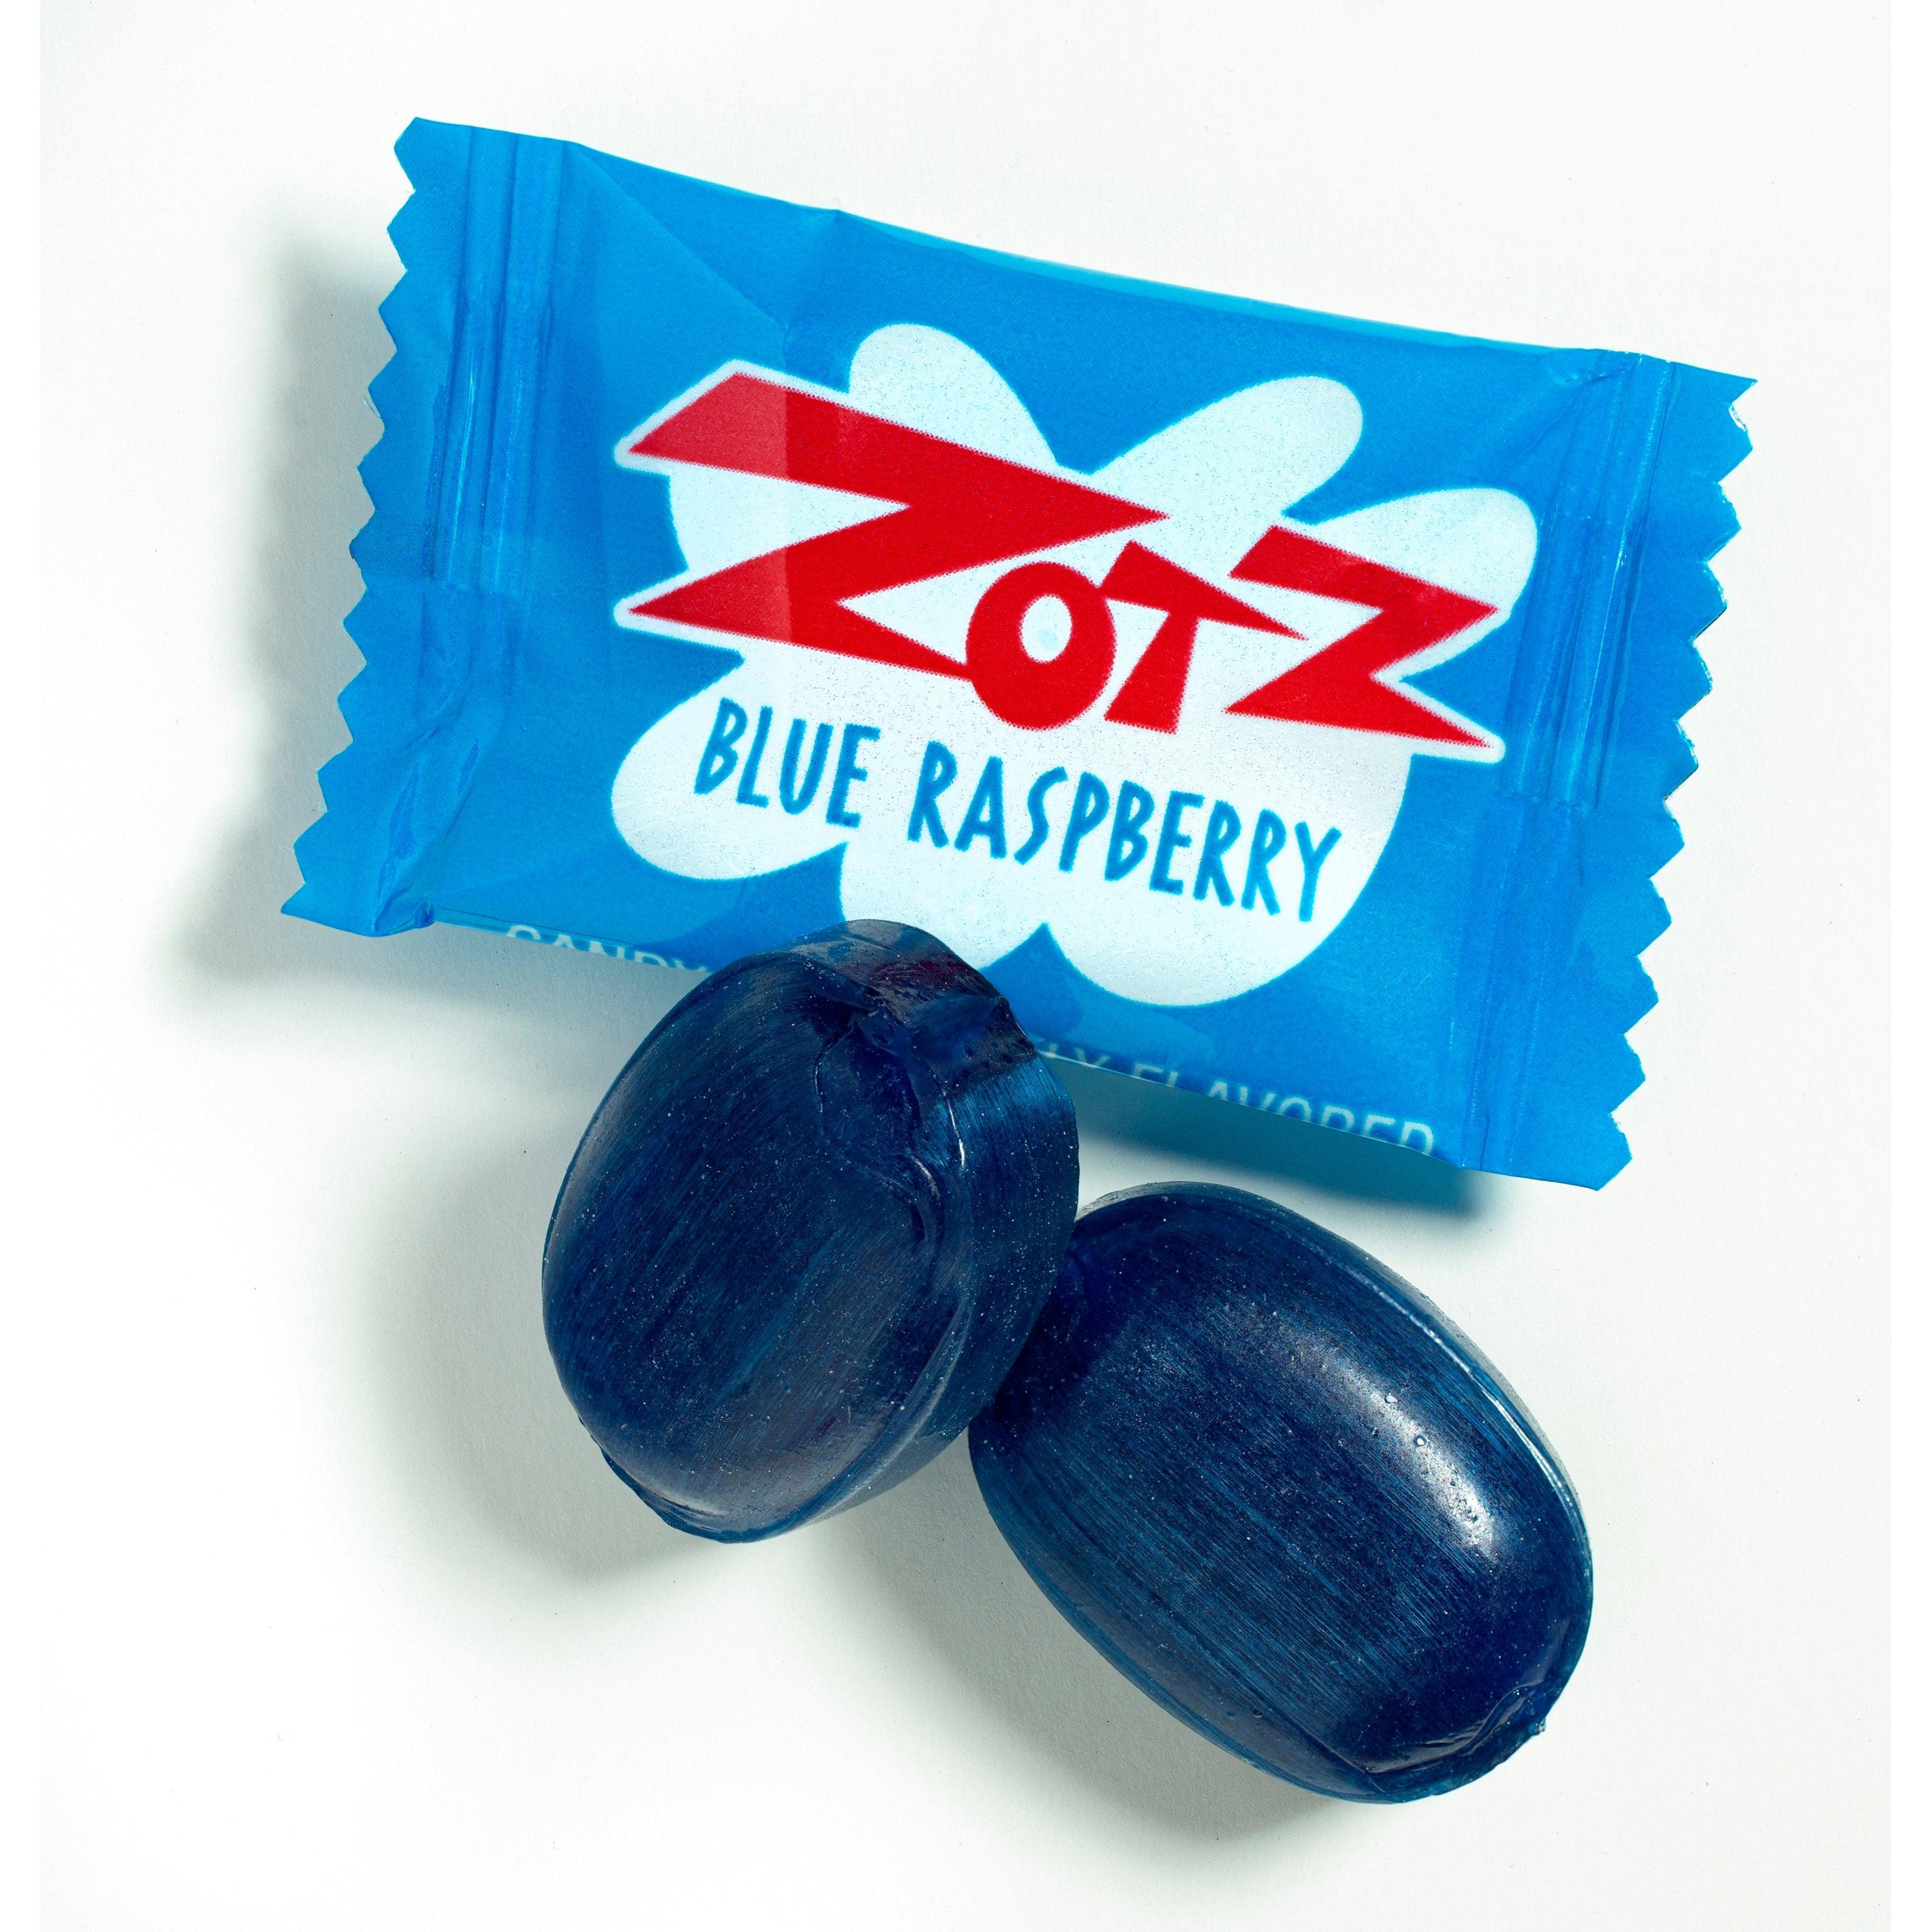 Zotz-Zotz Hard Candies Blue Raspberry - 46 Piece 8.1 oz Bag-0580-Legacy Toys